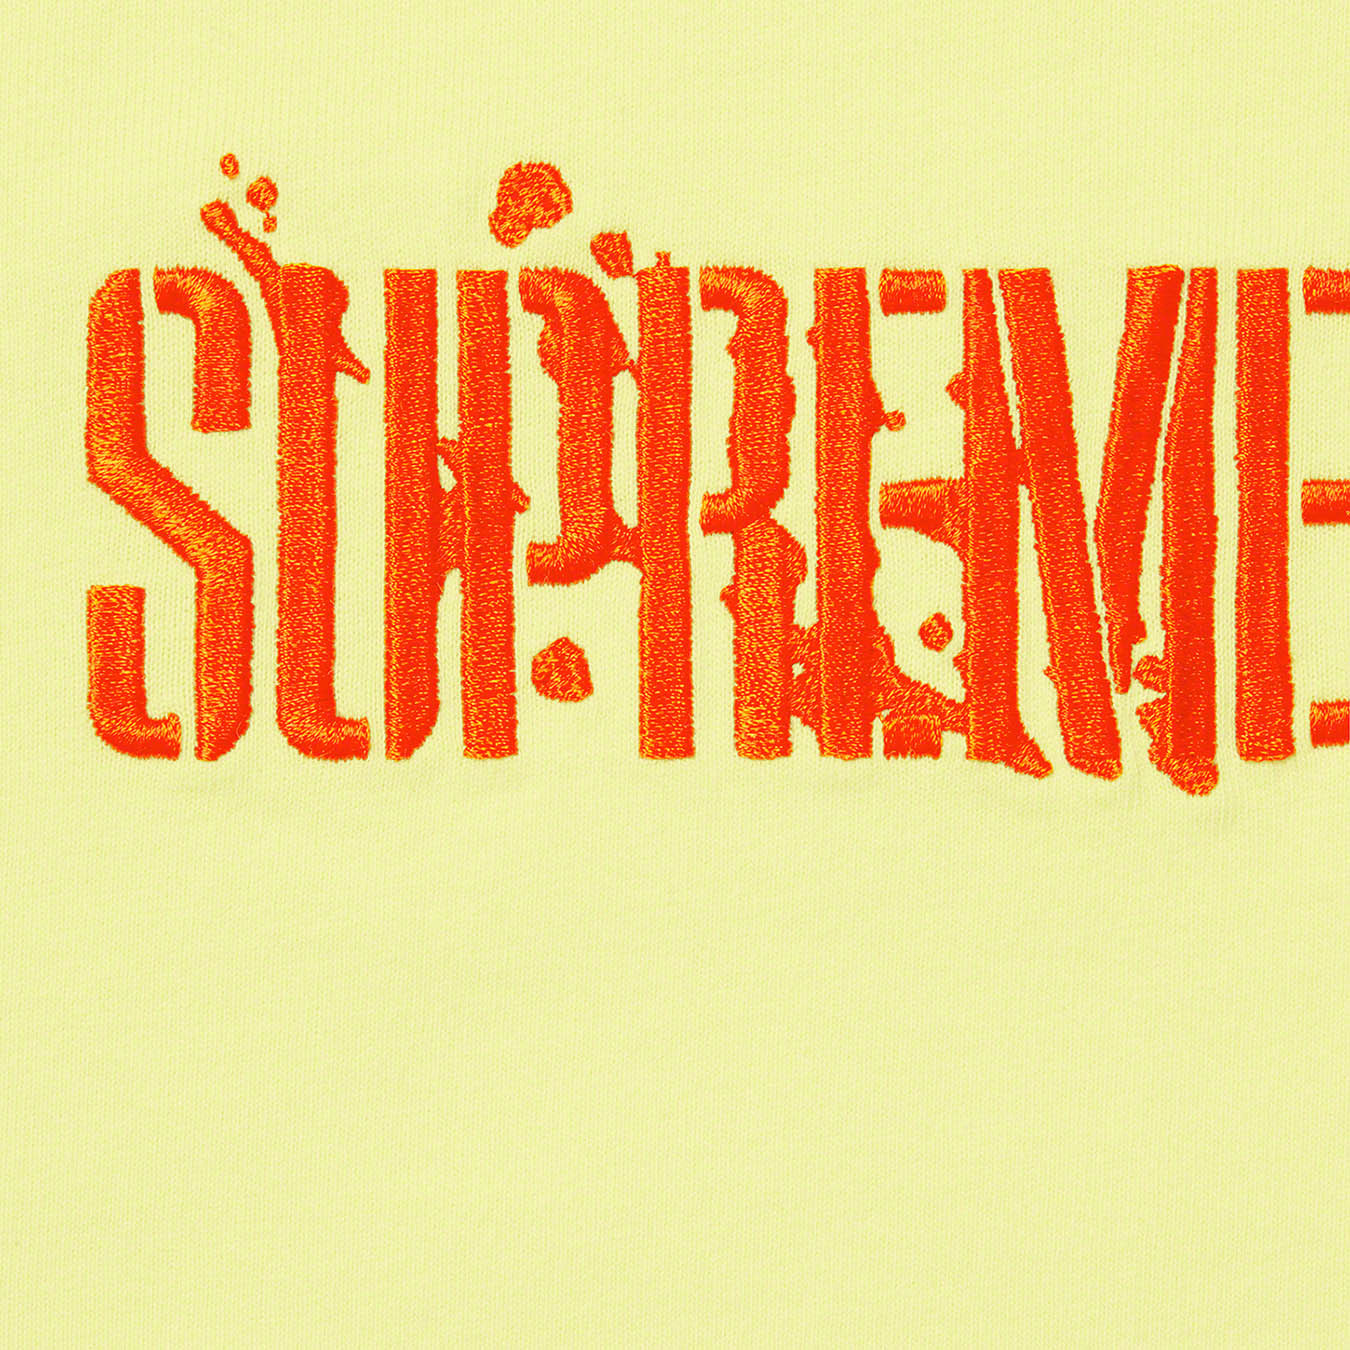 Supreme Splatter S/S Top